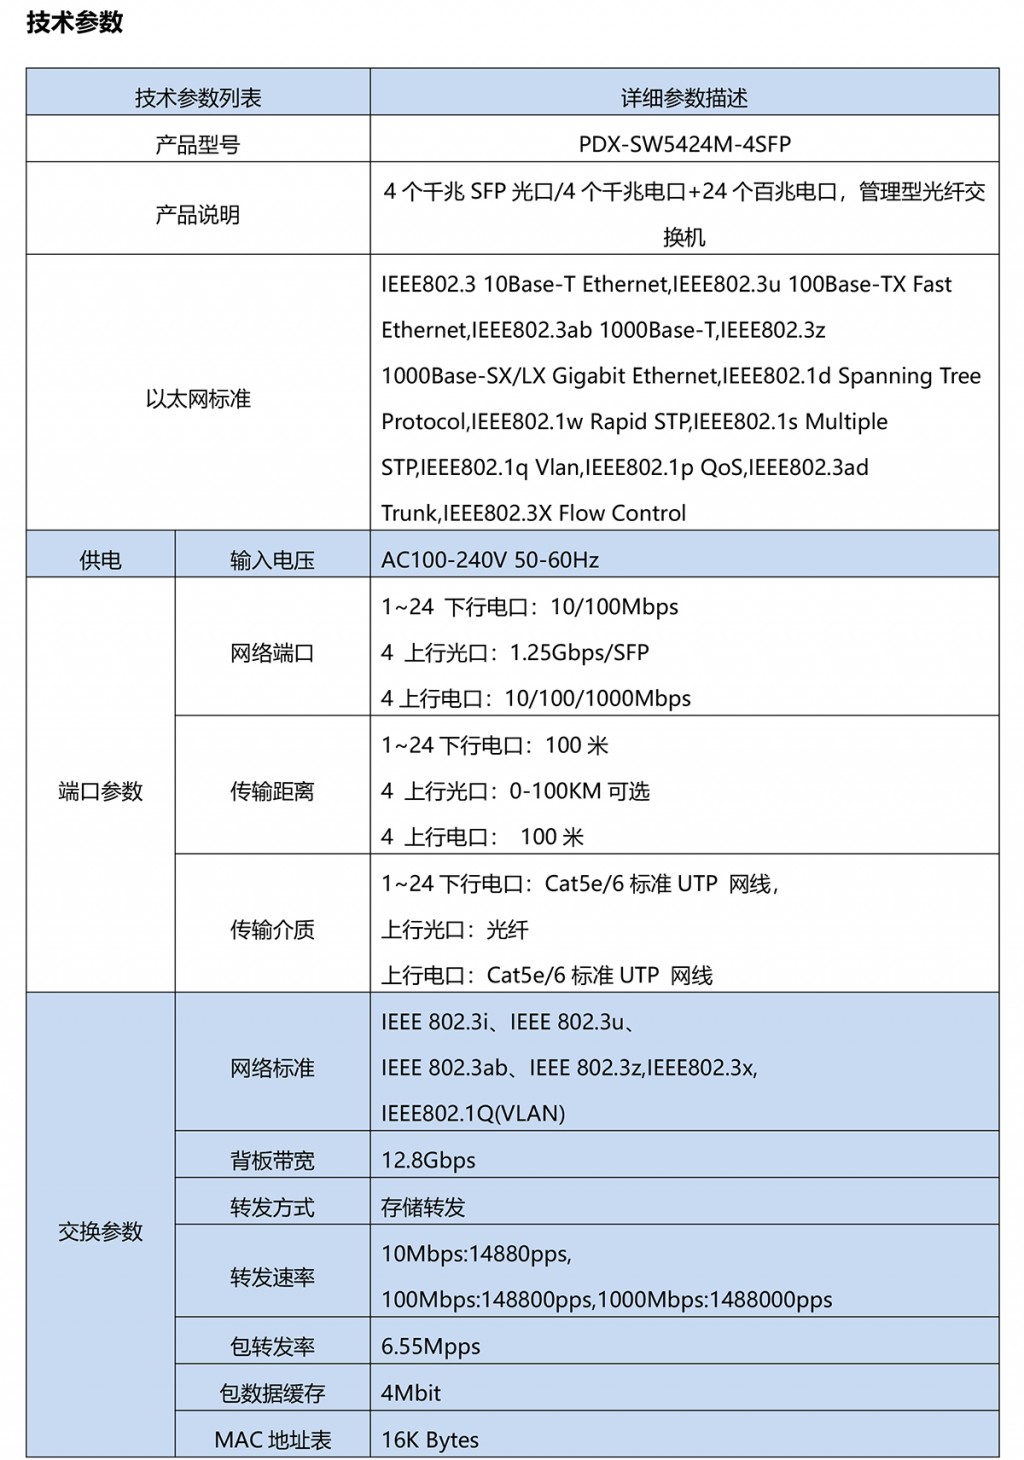 PDX-SW5424M-4SFP产品资料-2